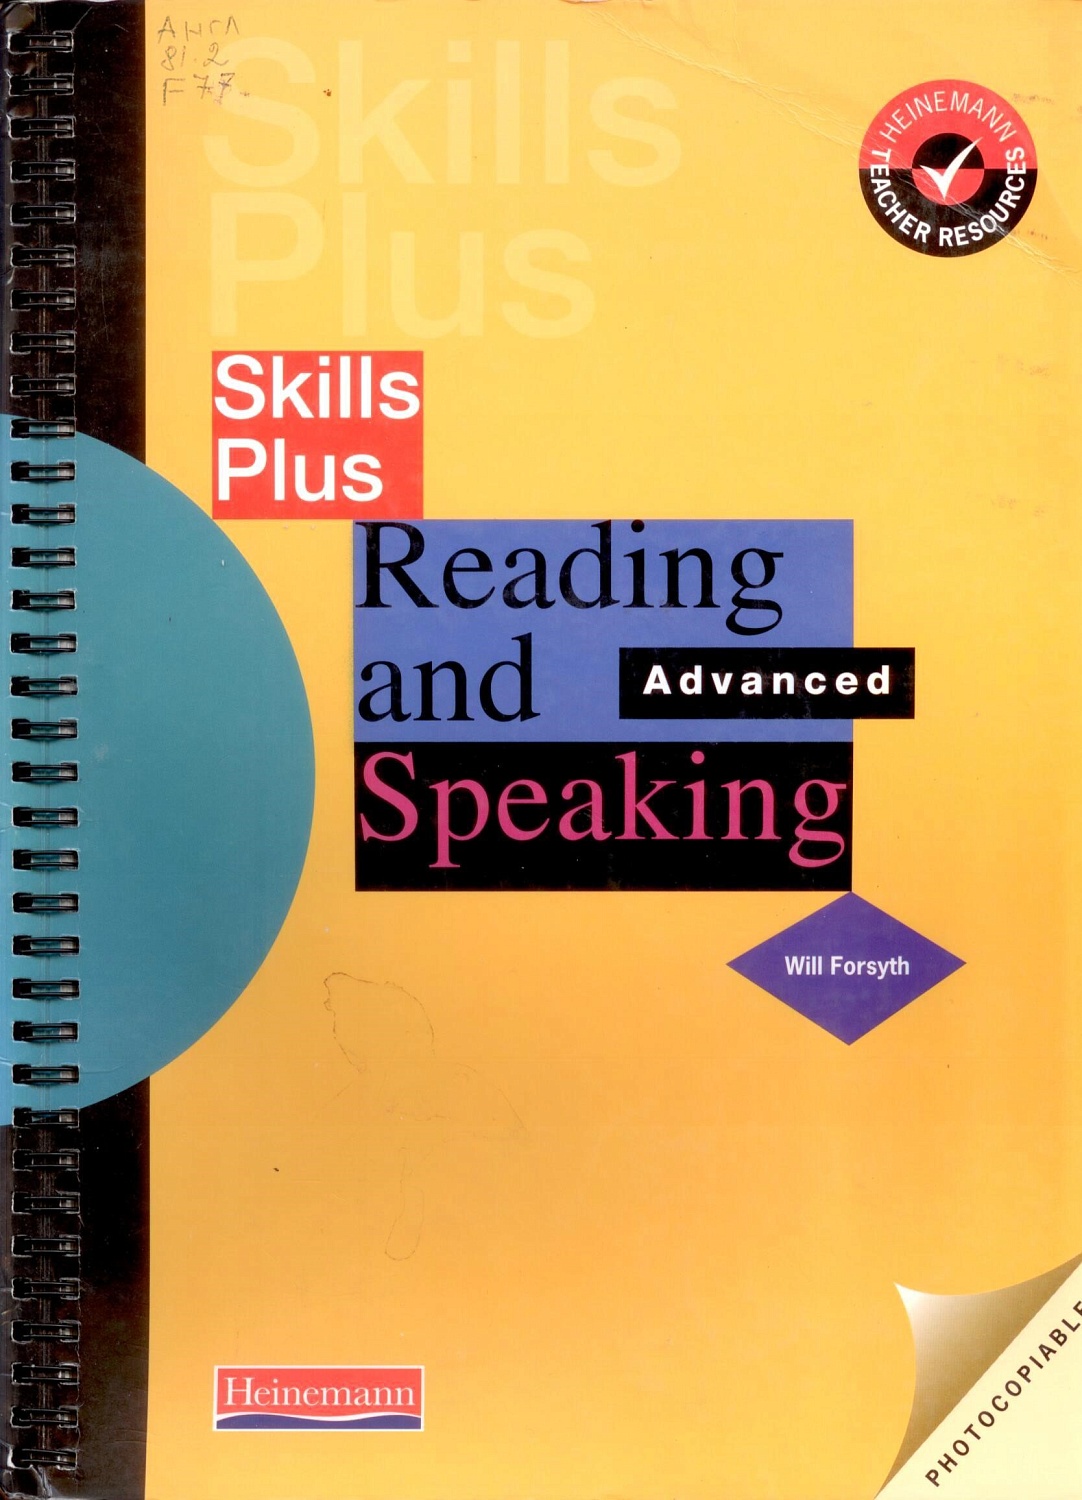 Англ 81.2 F 77 Skills Plus Reading and Speaking: Advanced / W. Forsyth. – Great Britain: Heinemann, 1996. – 112 p.  Пер. загл.: Навыки плюс чтение и разговорная практика: Продвинутый курс.